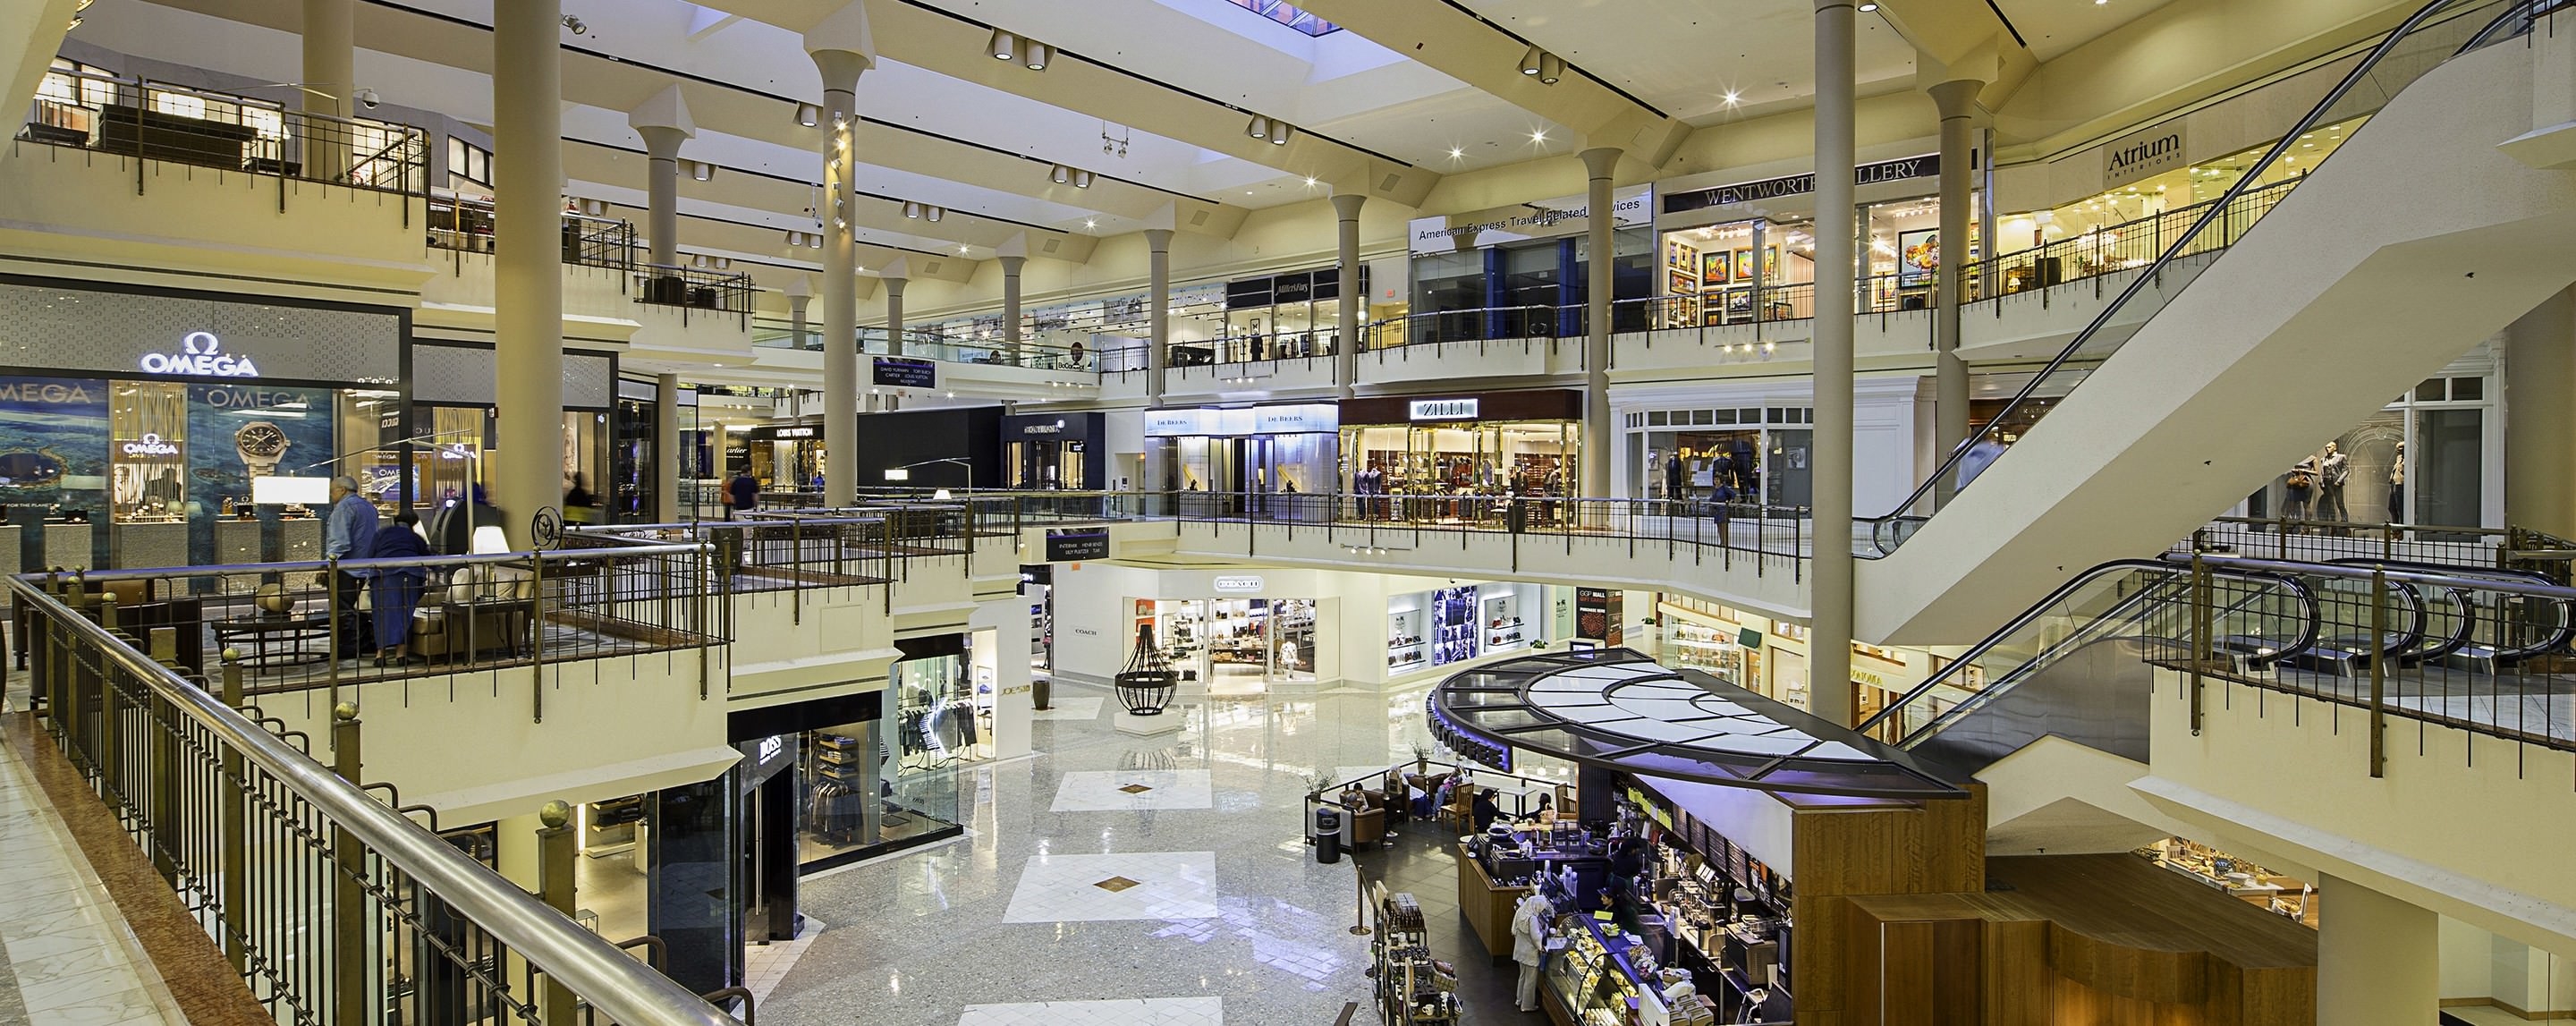 Tysons Galleria / Shopping Mall in McLean, VA USA 